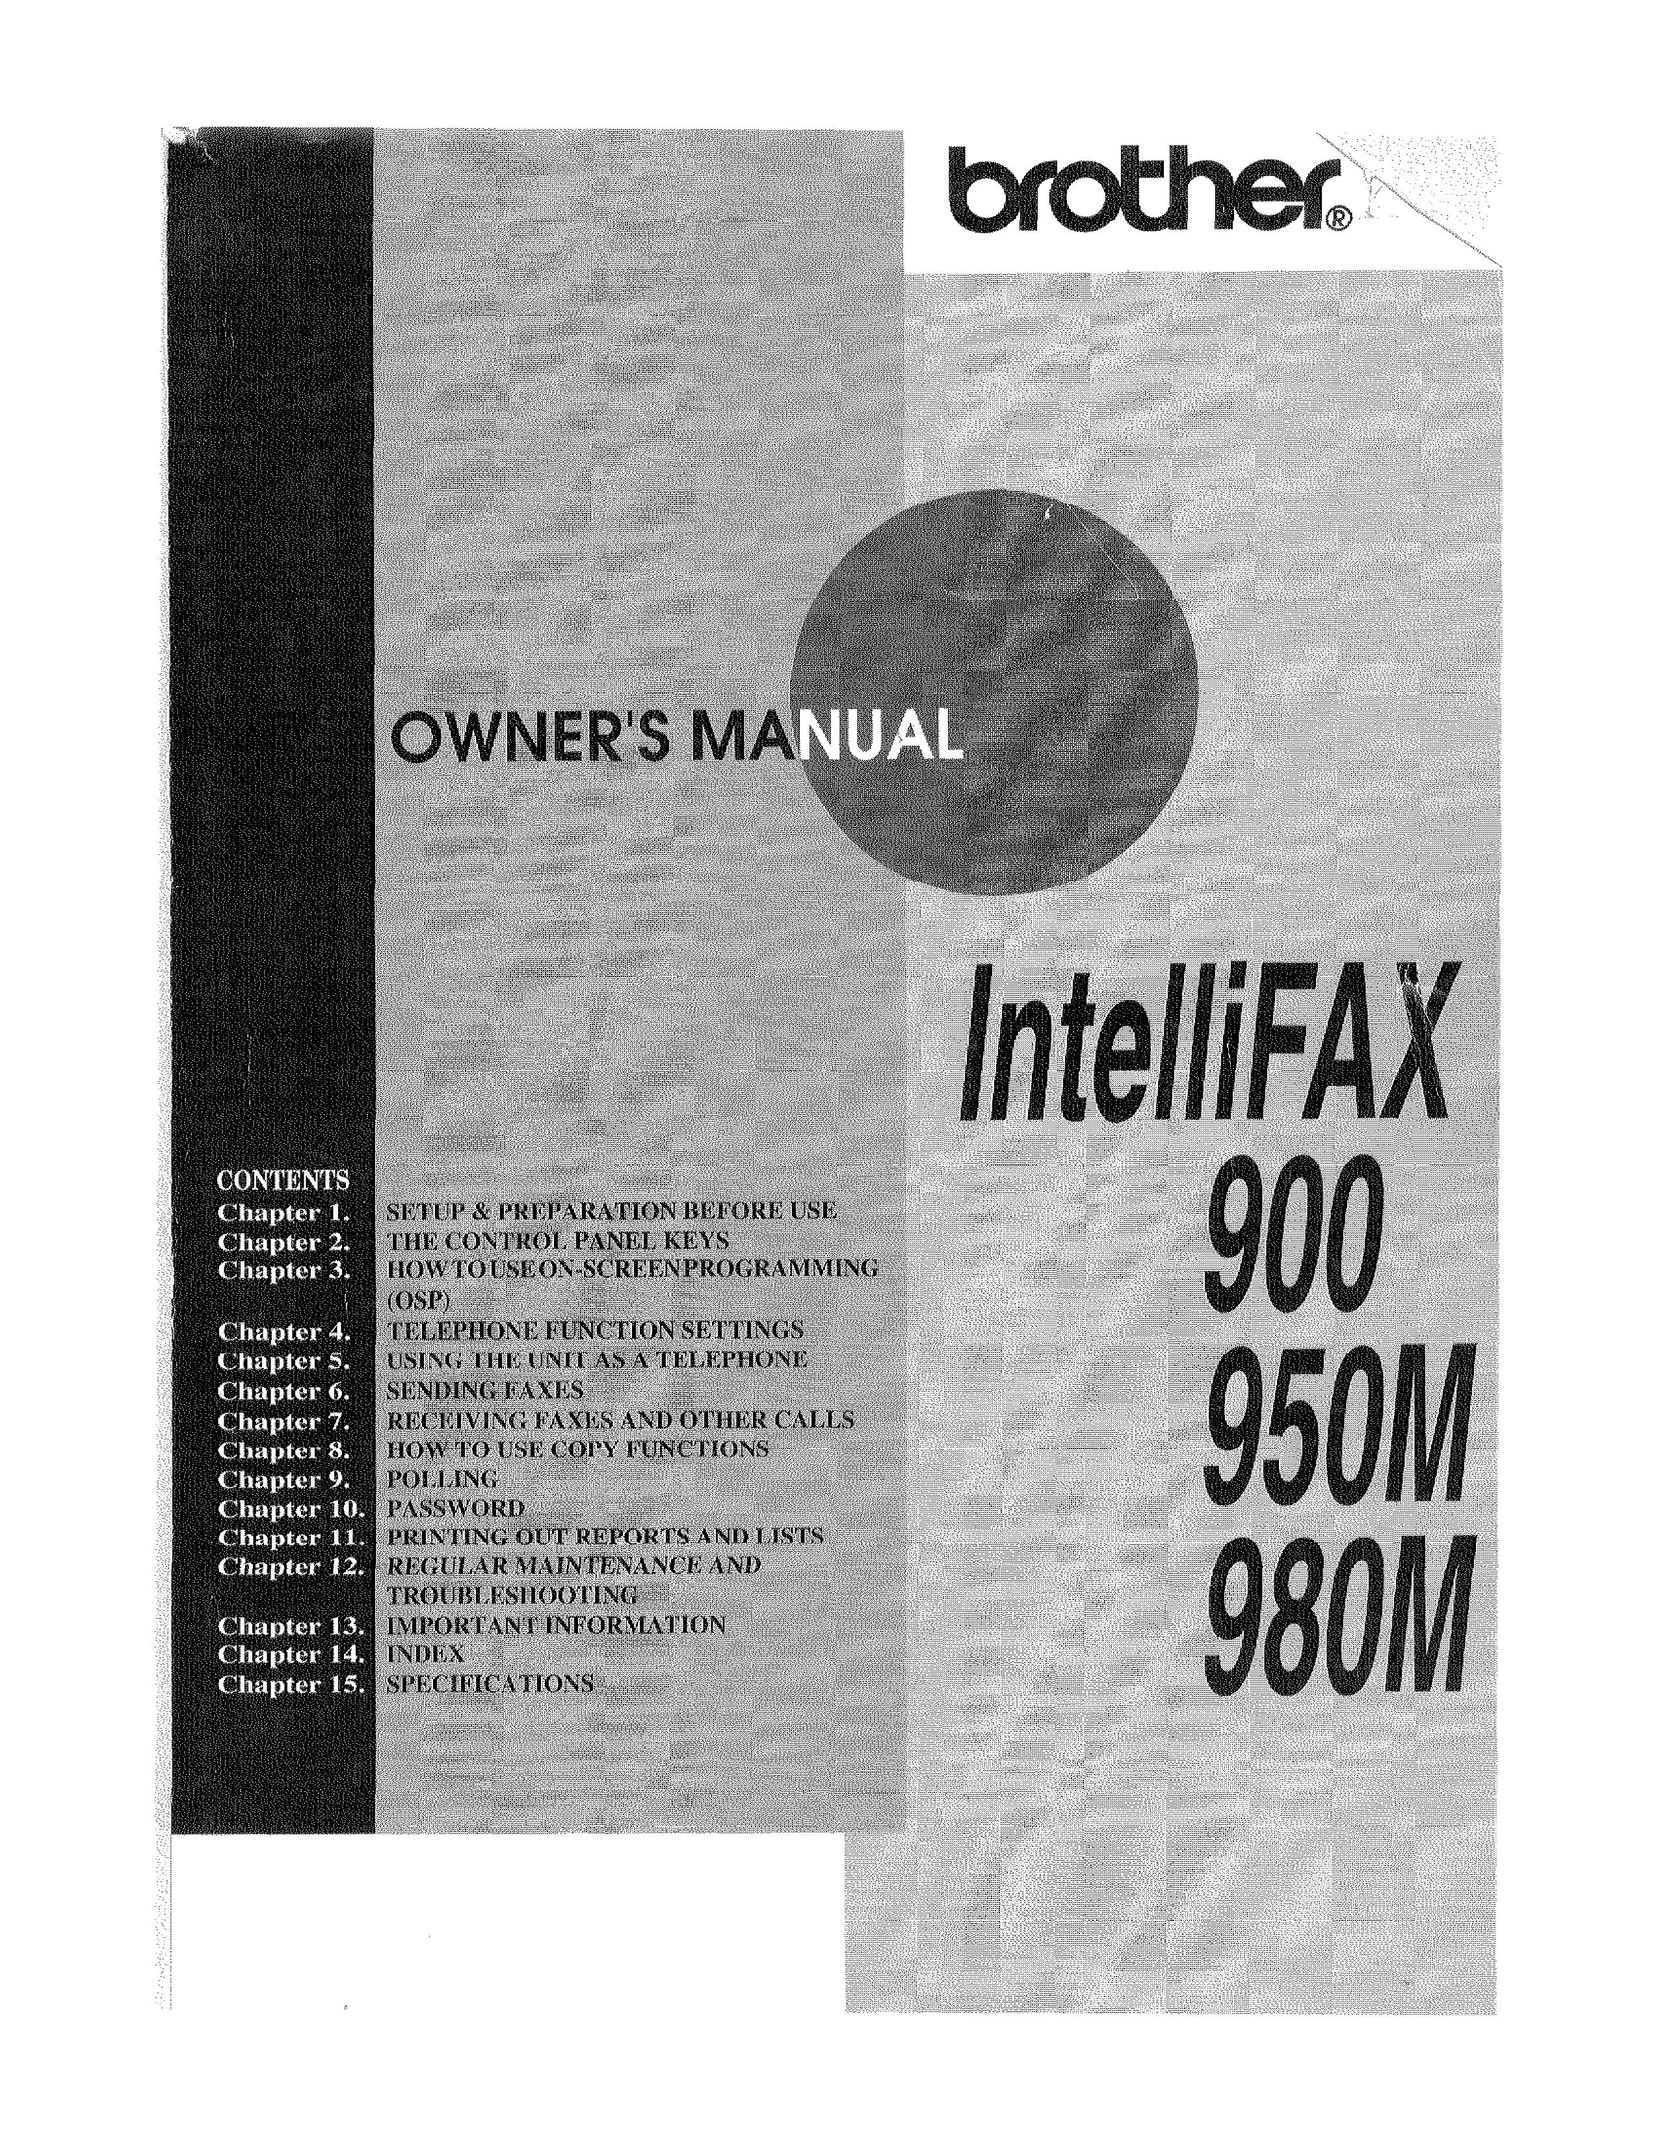 Brother 980M Fax Machine User Manual